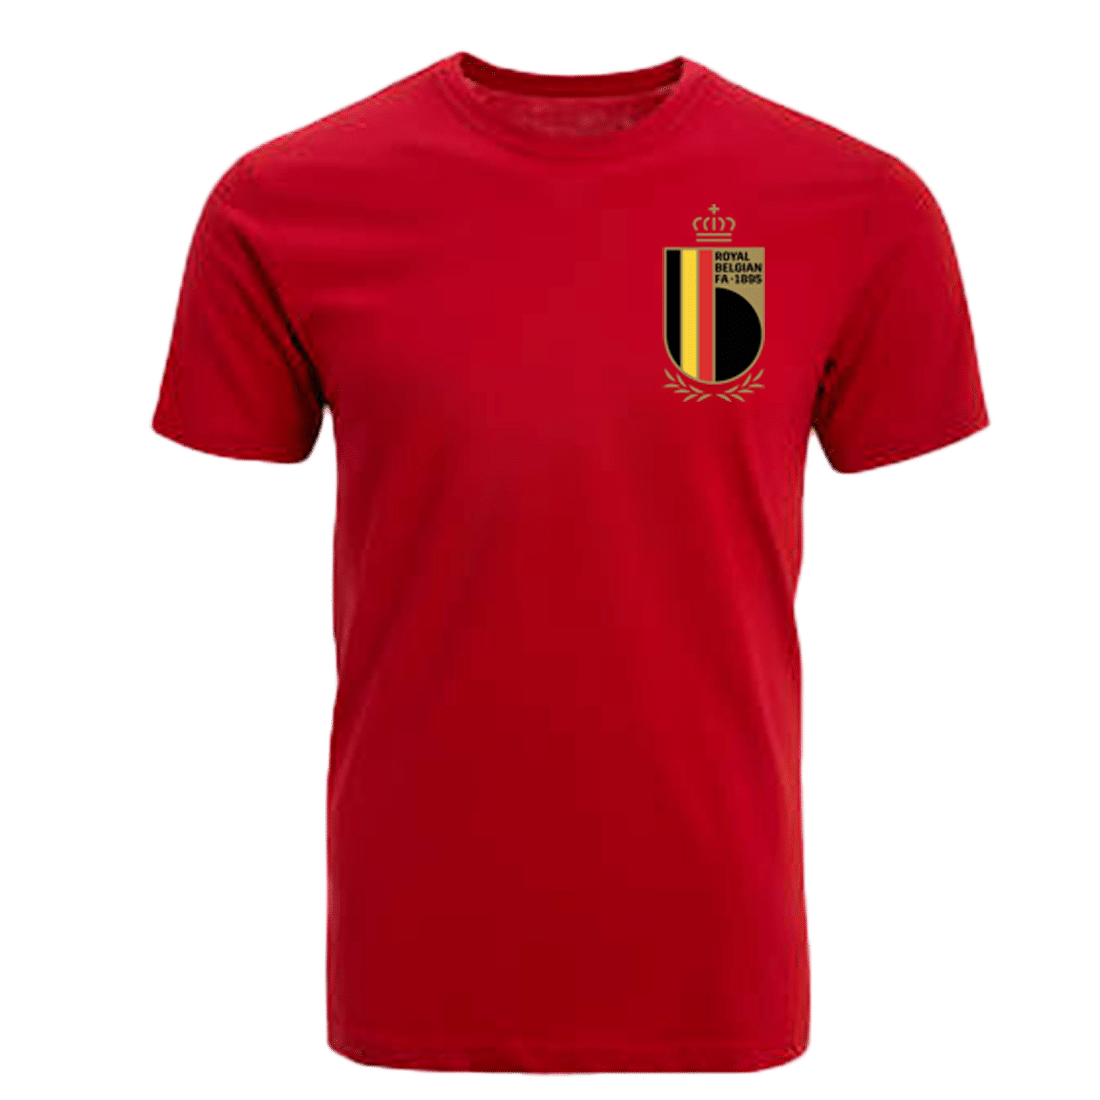 Voorkant Belgie shirts